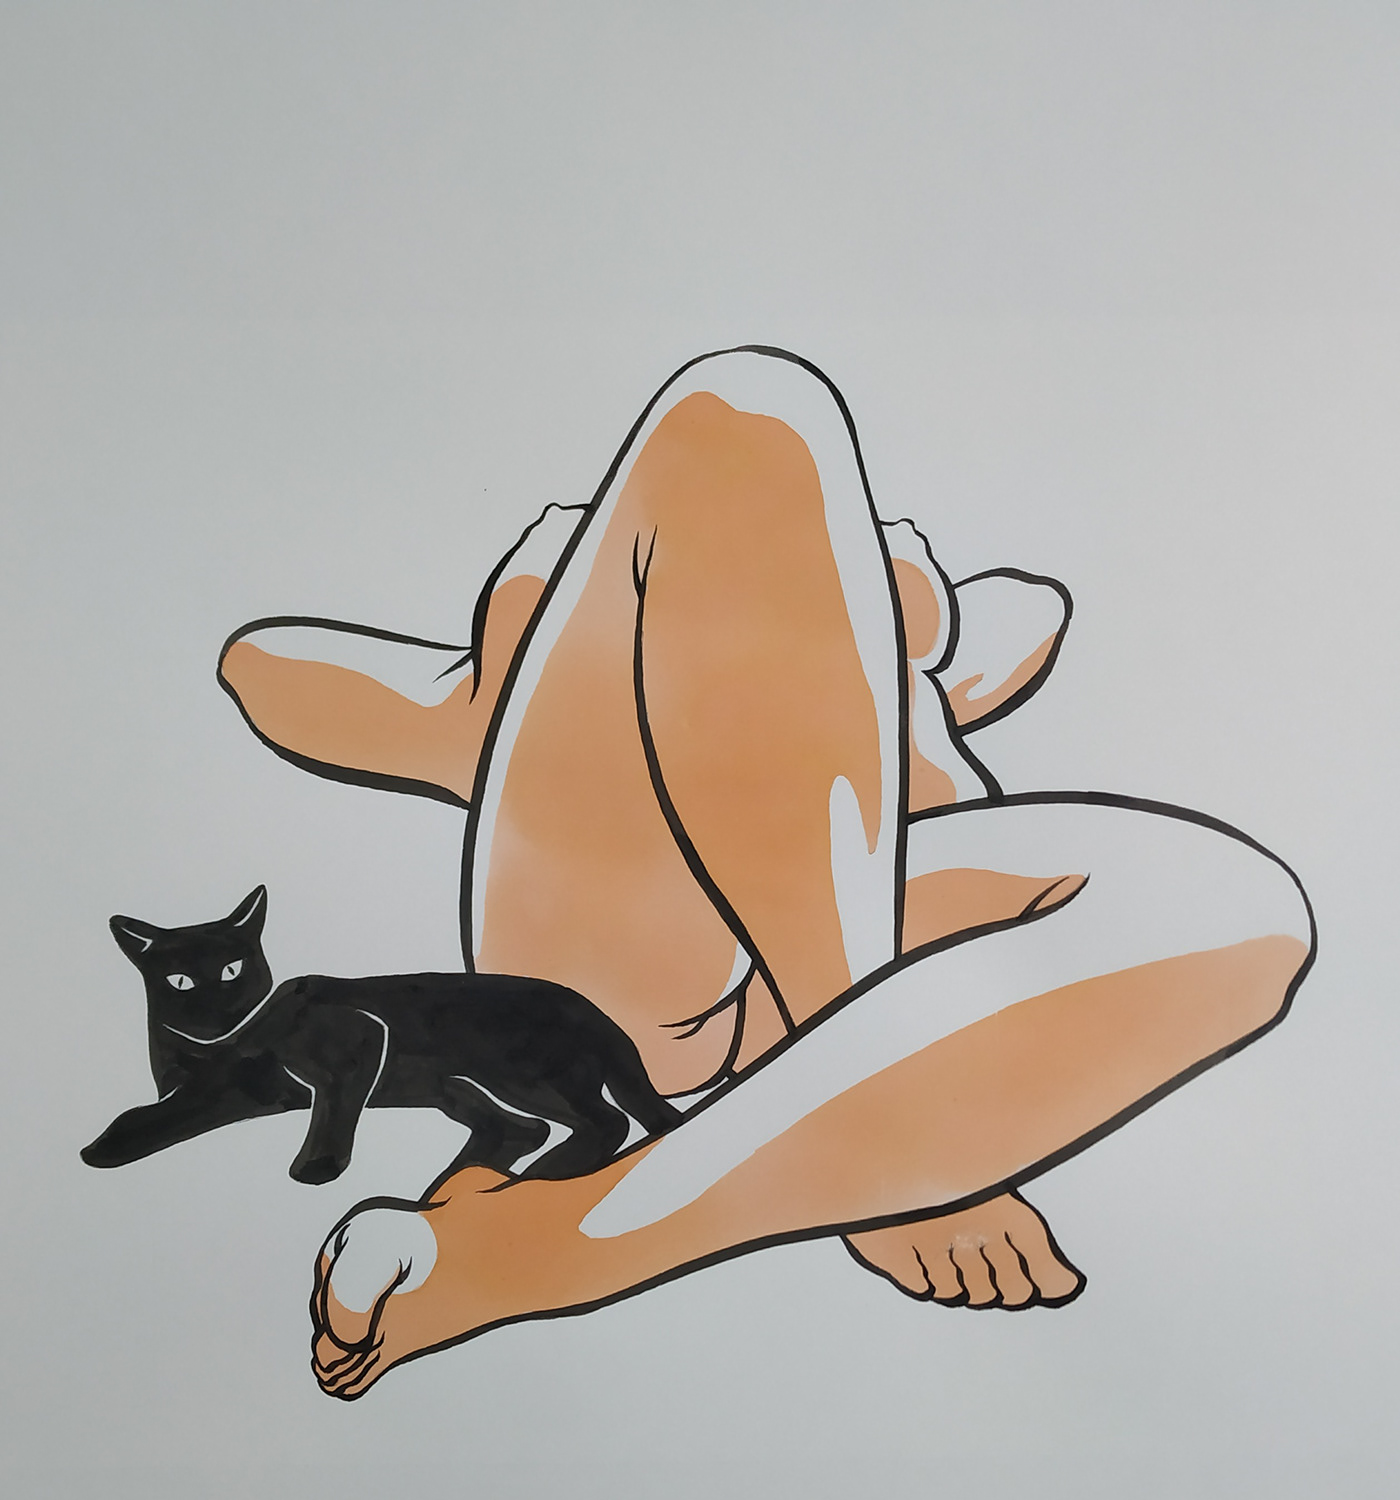 Image may contain: cartoon, drawing and cat